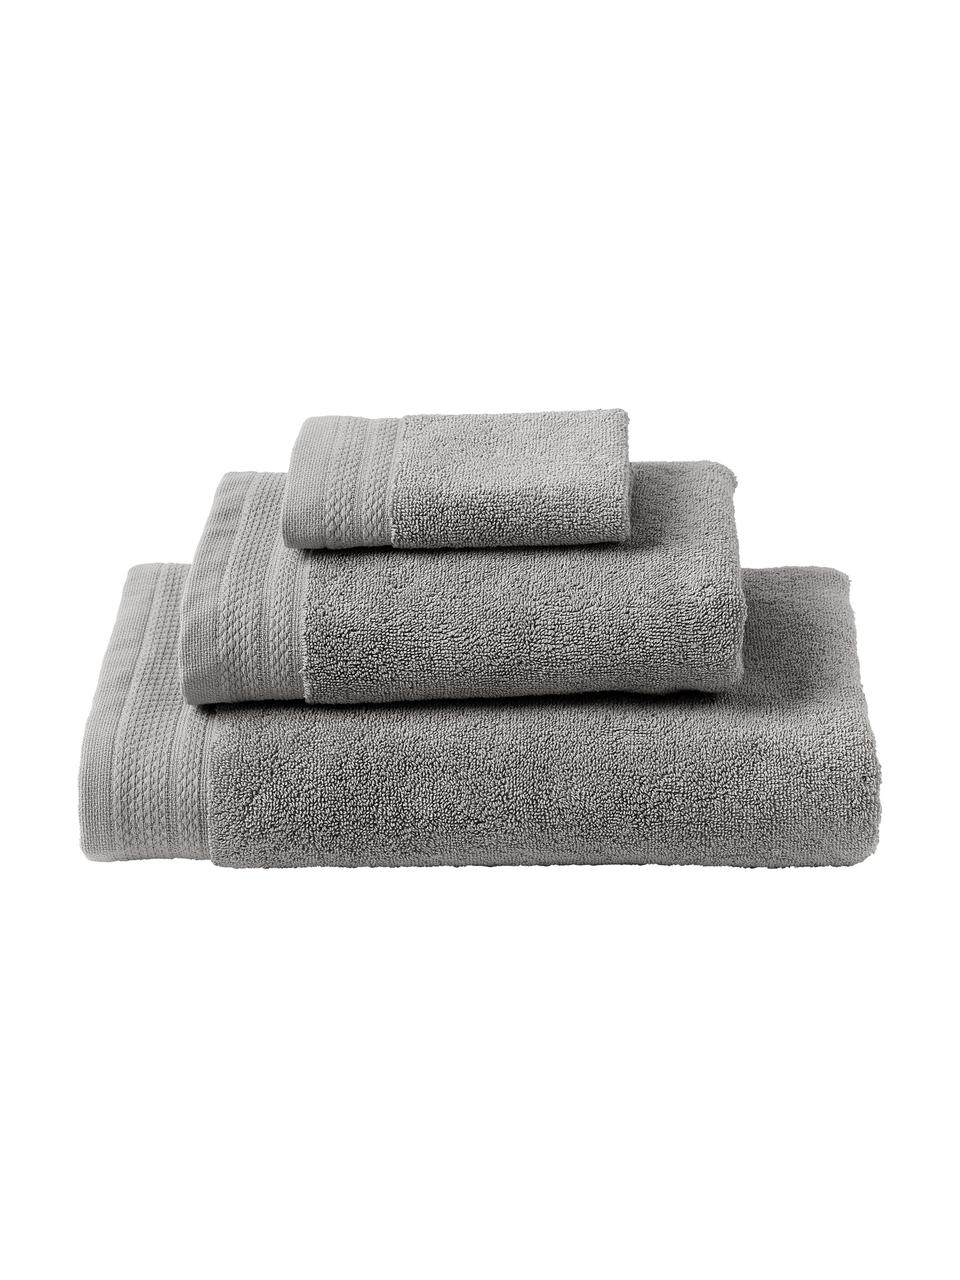 Set 3 asciugamani in cotone organico Premium, 100% cotone organico certificato GOTS (da GCL International, GCL-300517).
Qualità pesante, 600 g/m², Grigio scuro, Set in varie misure